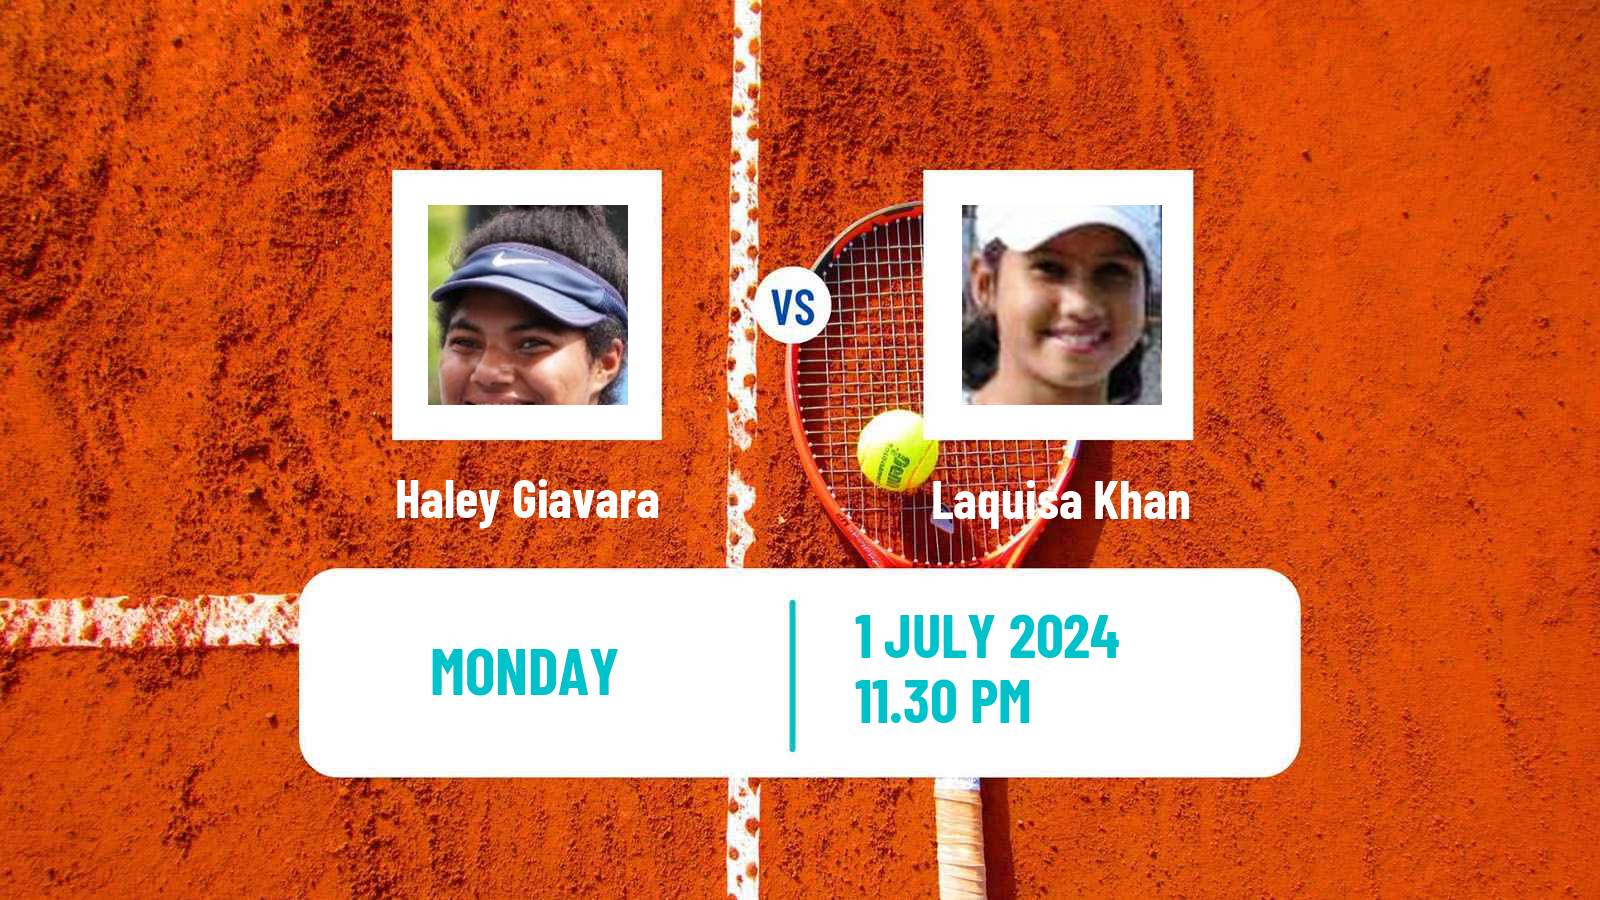 Tennis ITF W35 Nakhon Si Thammarat 2 Women Haley Giavara - Laquisa Khan